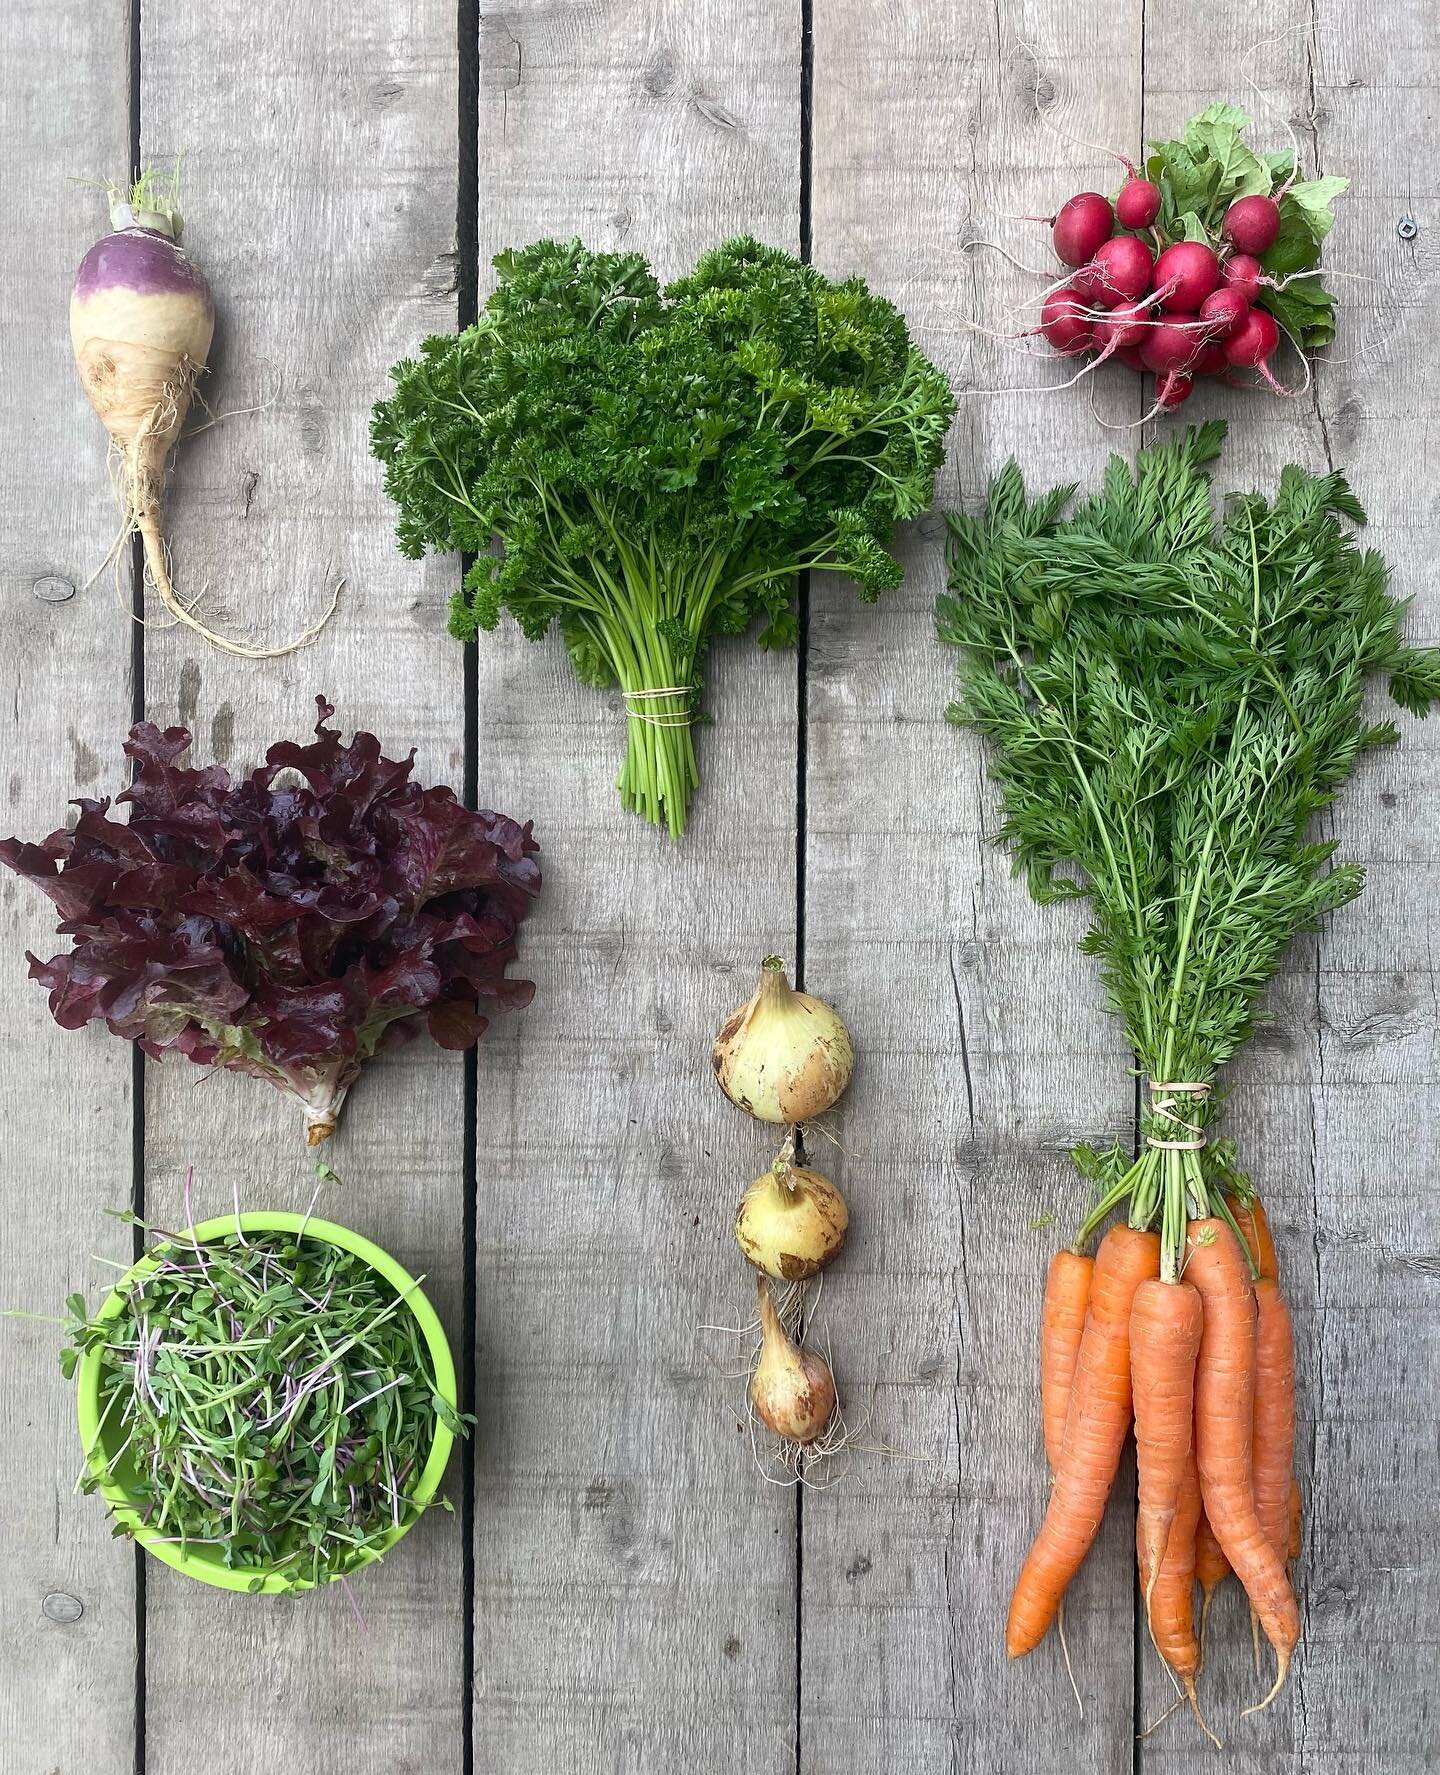 Week 12 of 15! Rutabaga, lettuce, microgreens mix, parsley, onions, radishes and carrots. Enjoy!
#sunrootfarm #rootsveggie #stilllotsofgreens #smallscalefarming #csabox #fallishere🍁🍂🍃